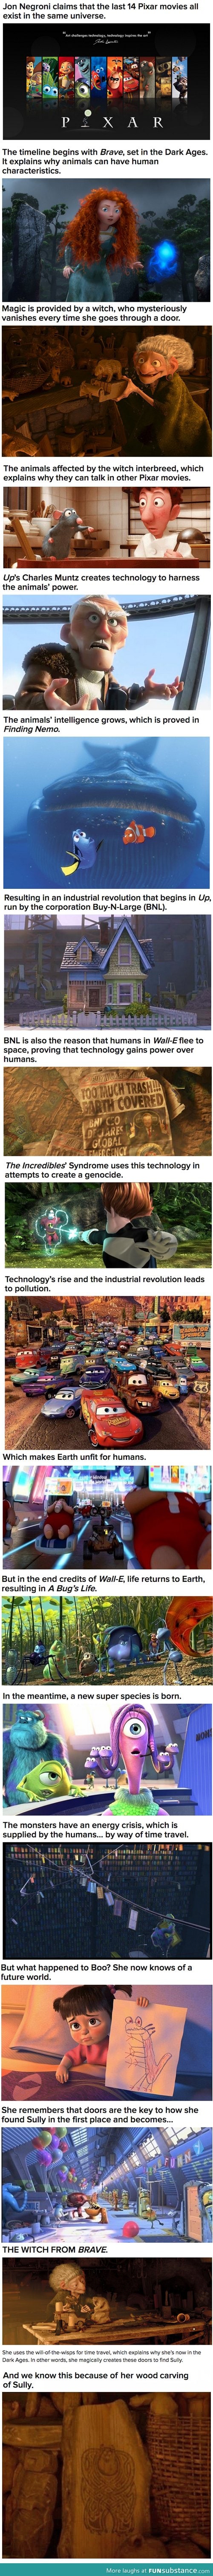 Pixar mindf*ck